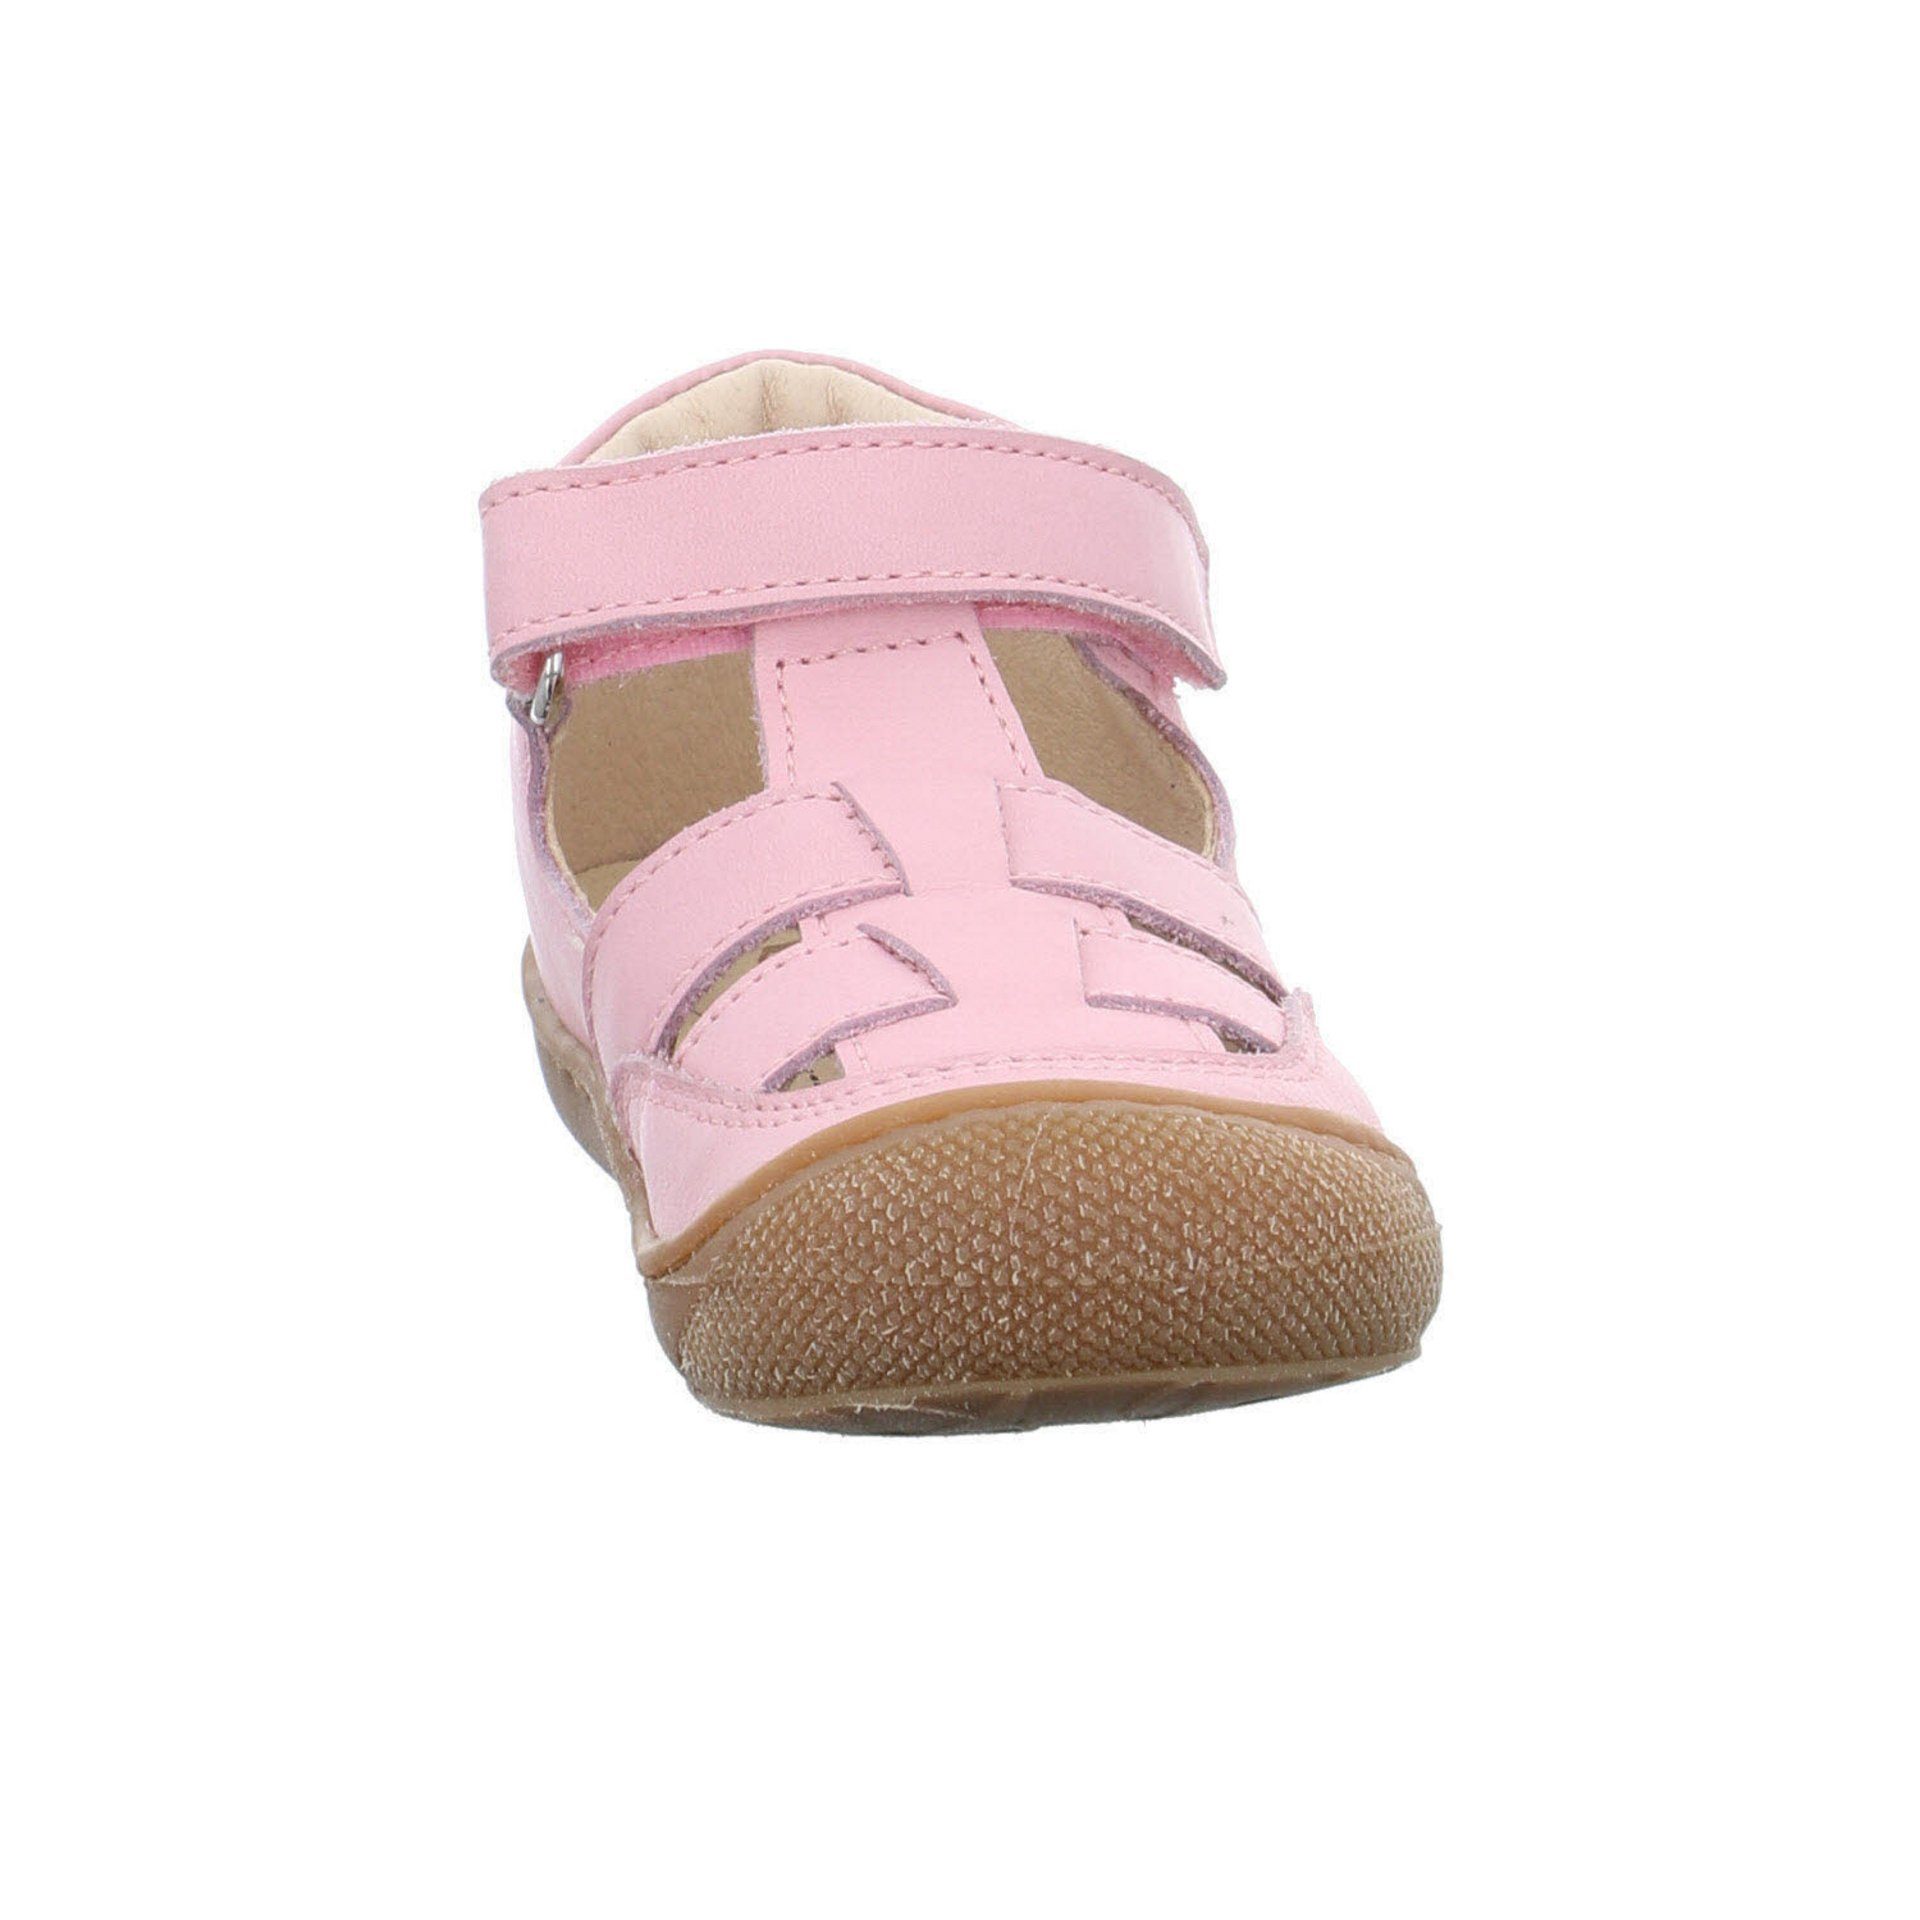 Naturino Sandale Kinderschuhe lila Glattleder Sandalen Minilette Schuhe hell + rot Wad Mädchen